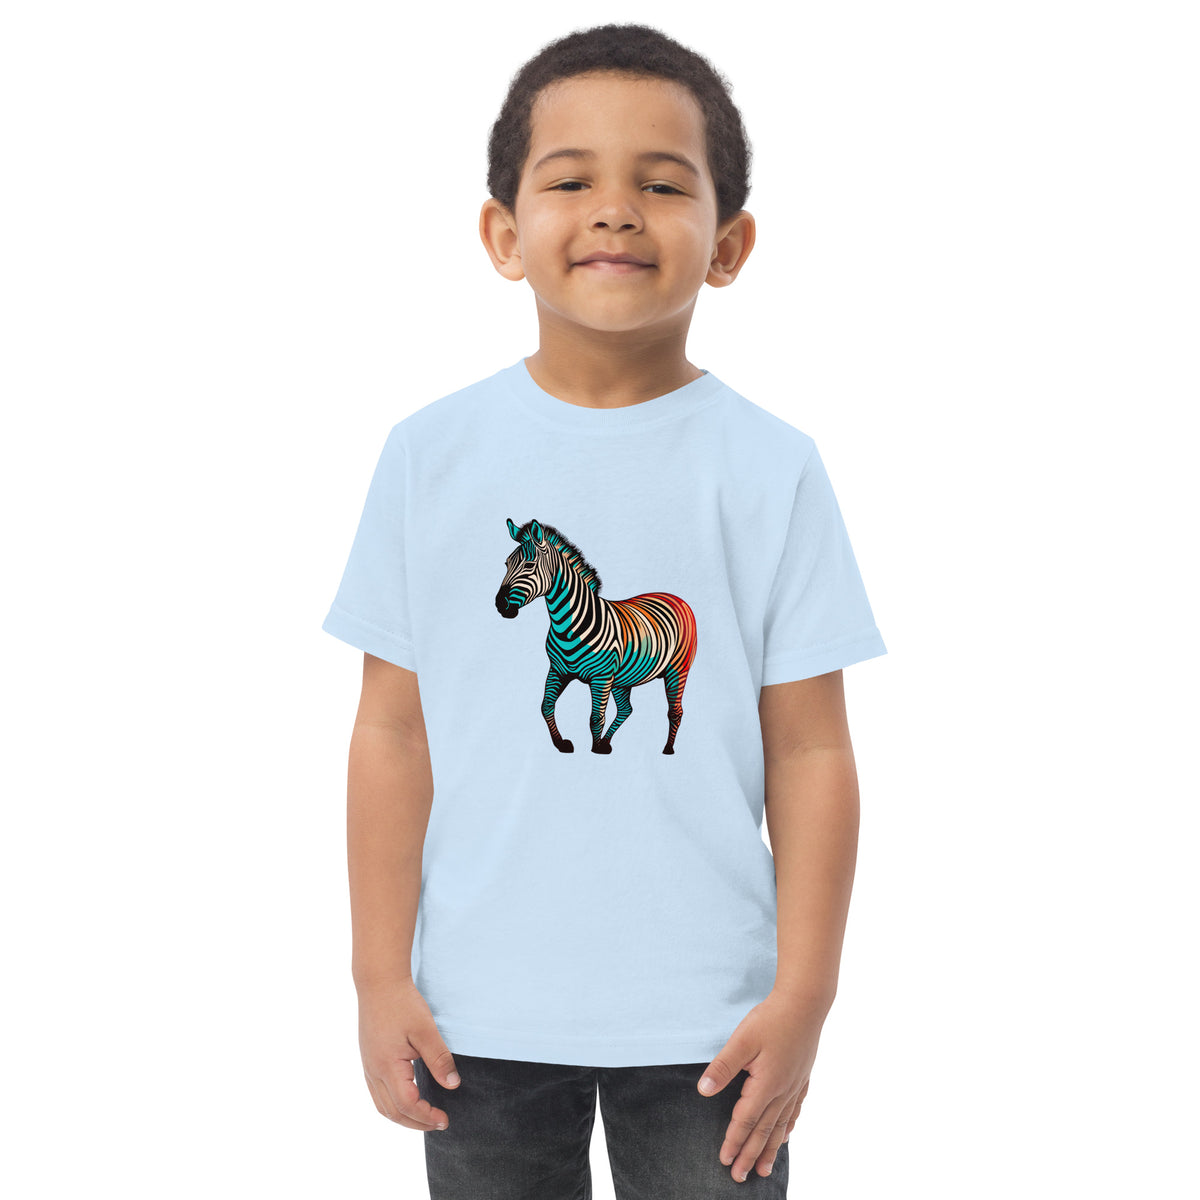 Zebra’s Zenful Zigzags Toddler T-Shirt